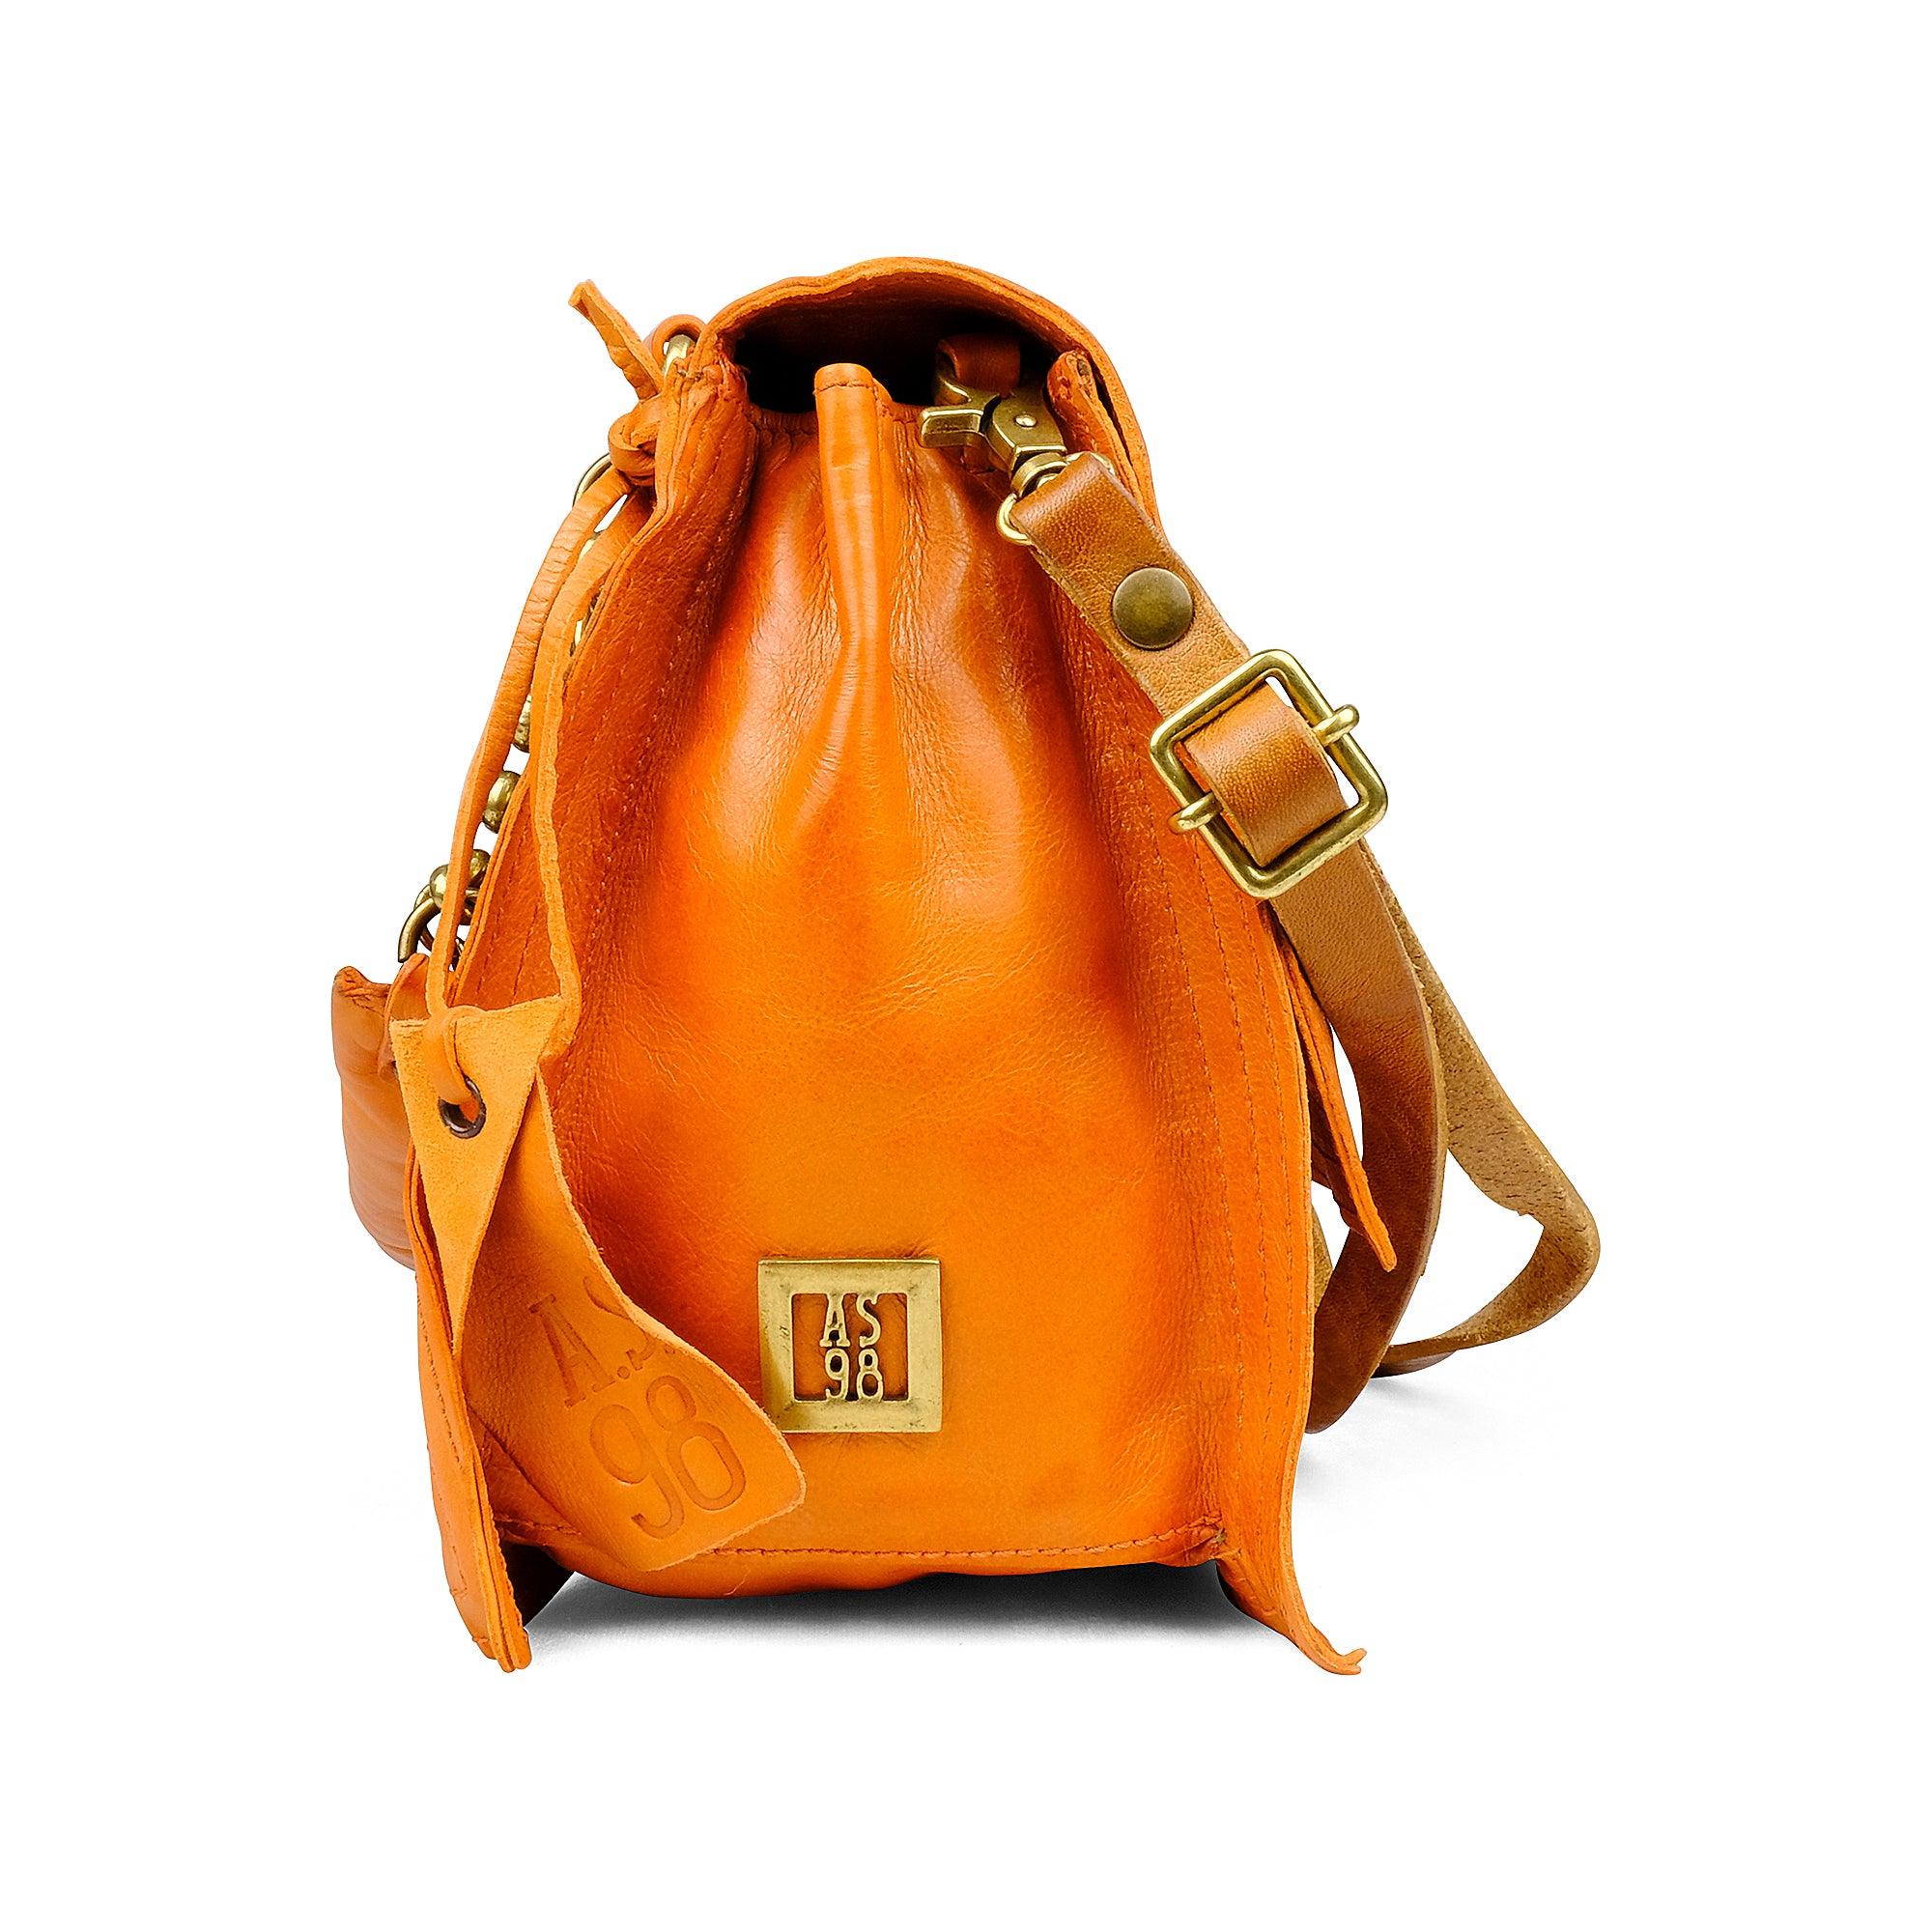 Cleo - A.S. 98 - Handbags